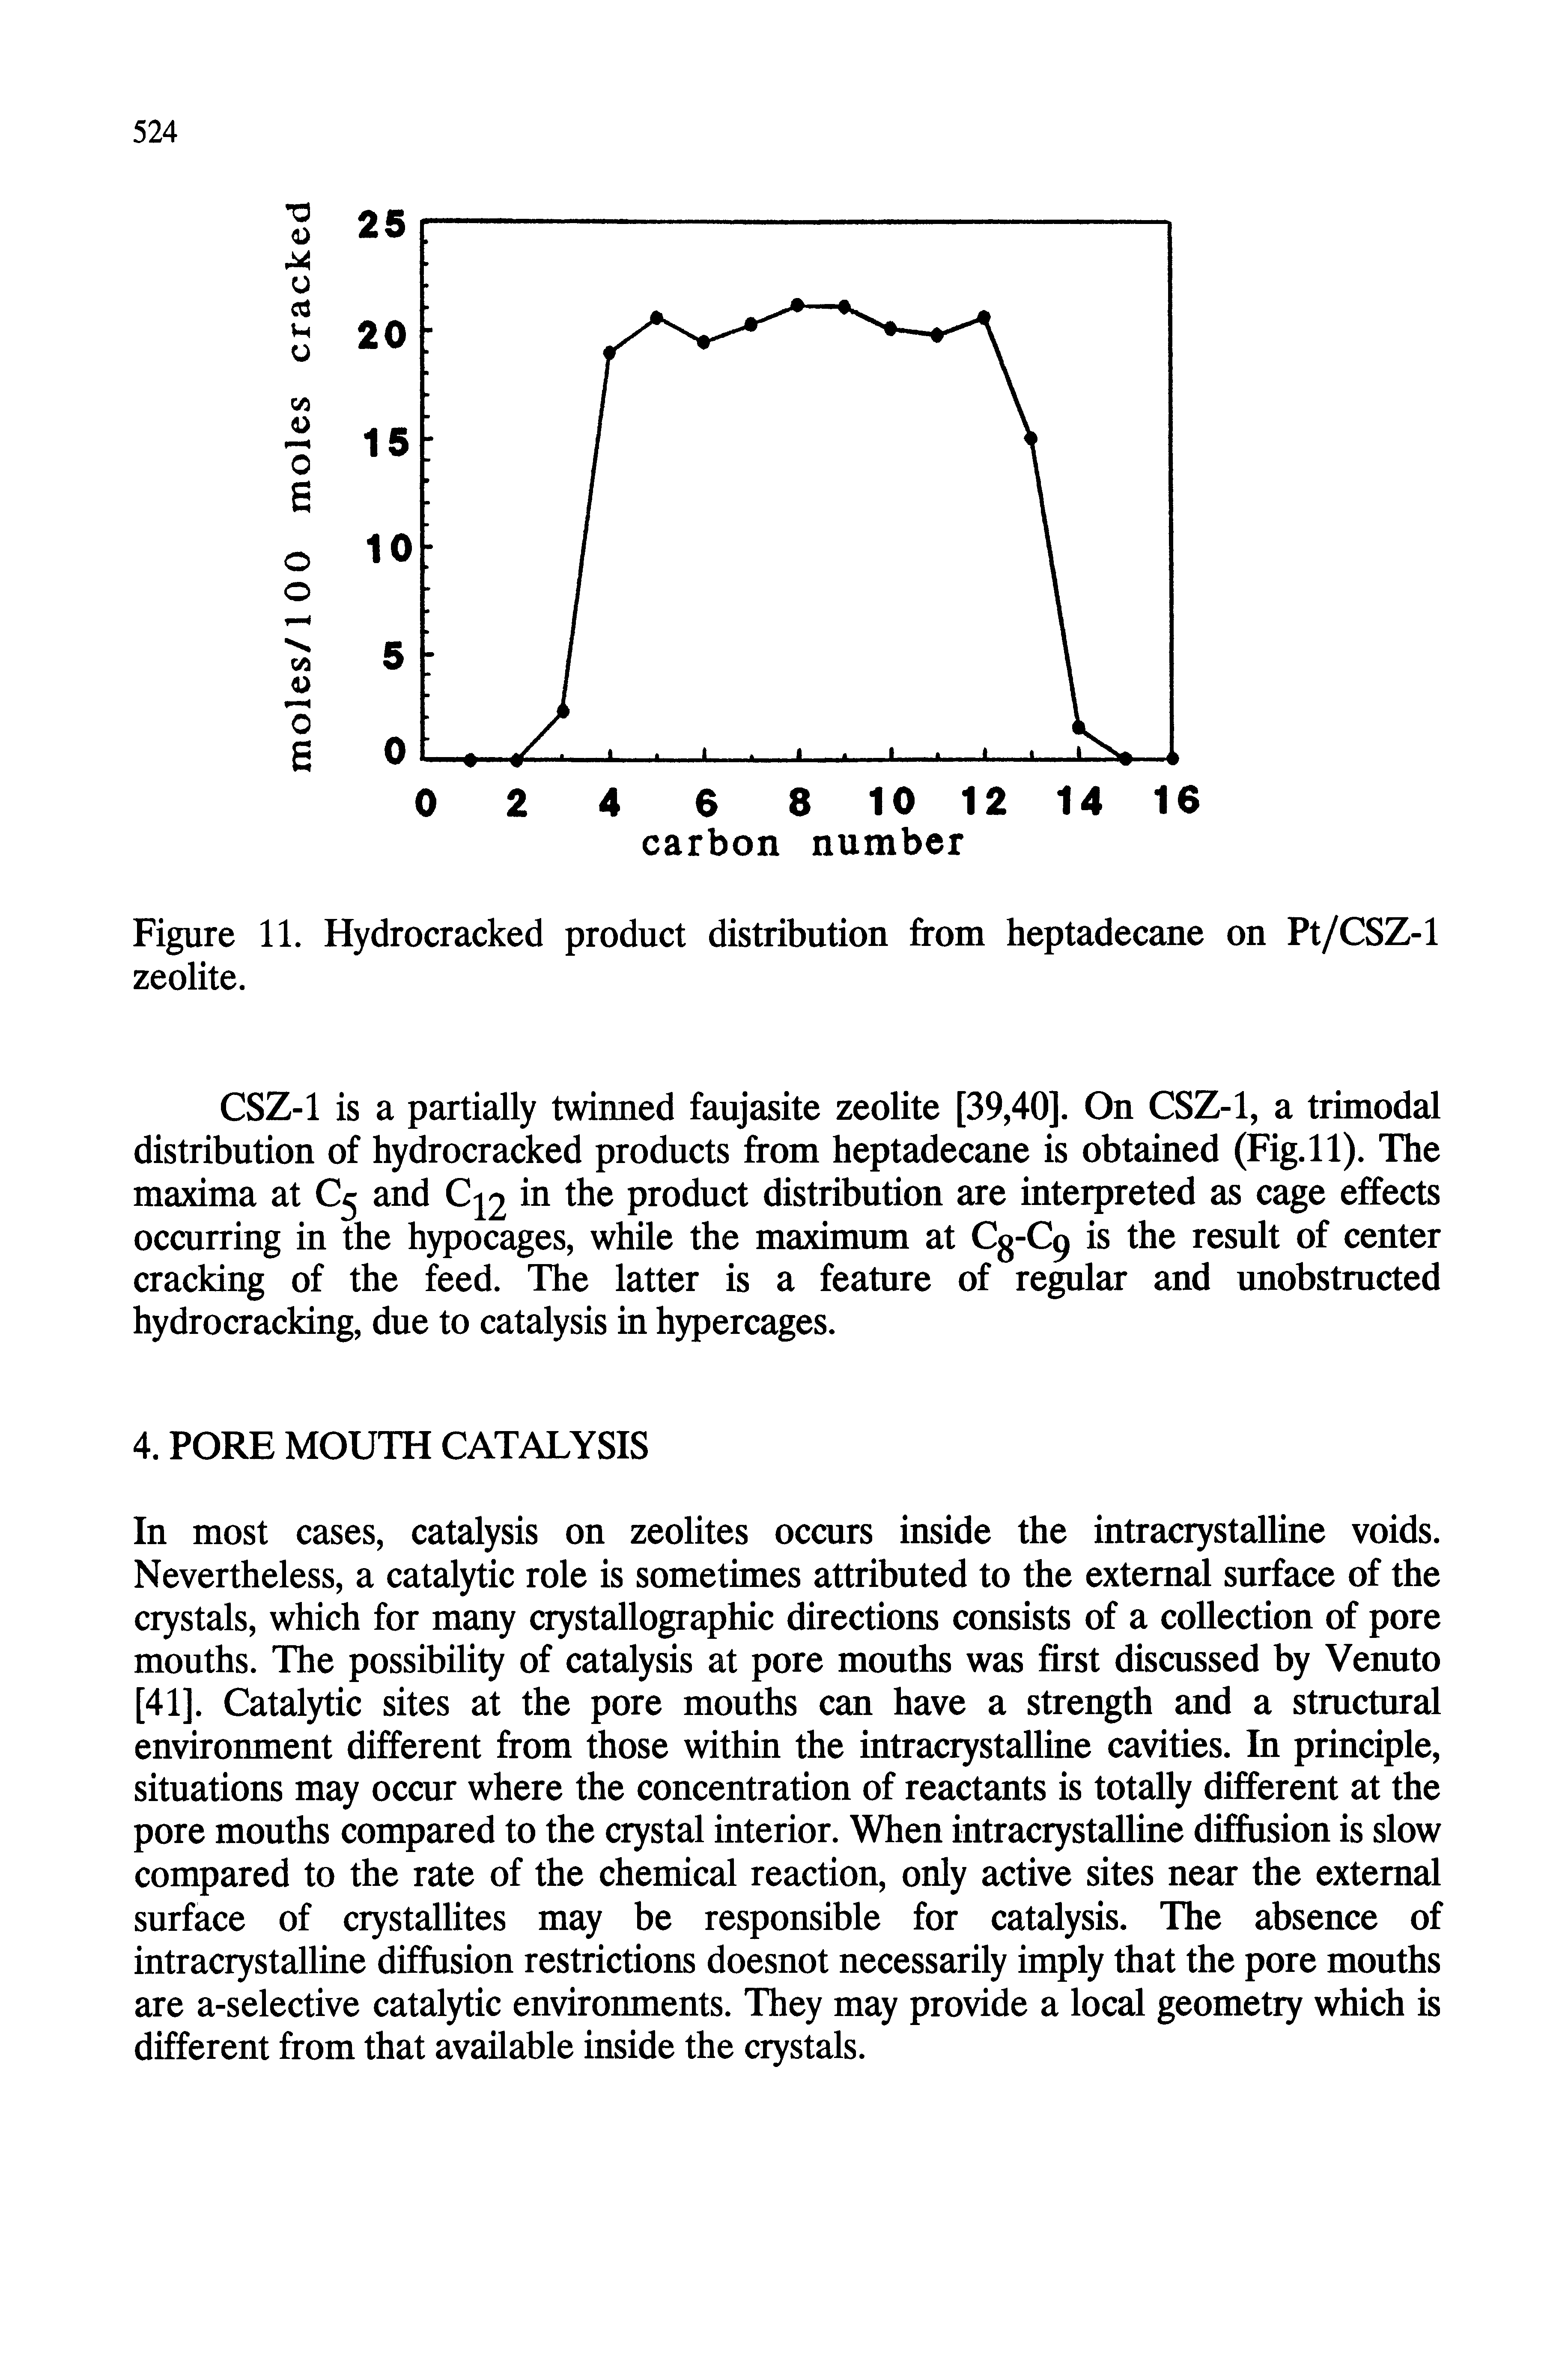 Figure 11. Hydrocracked product distribution from heptadecane on Pt/CSZ-1 zeolite.